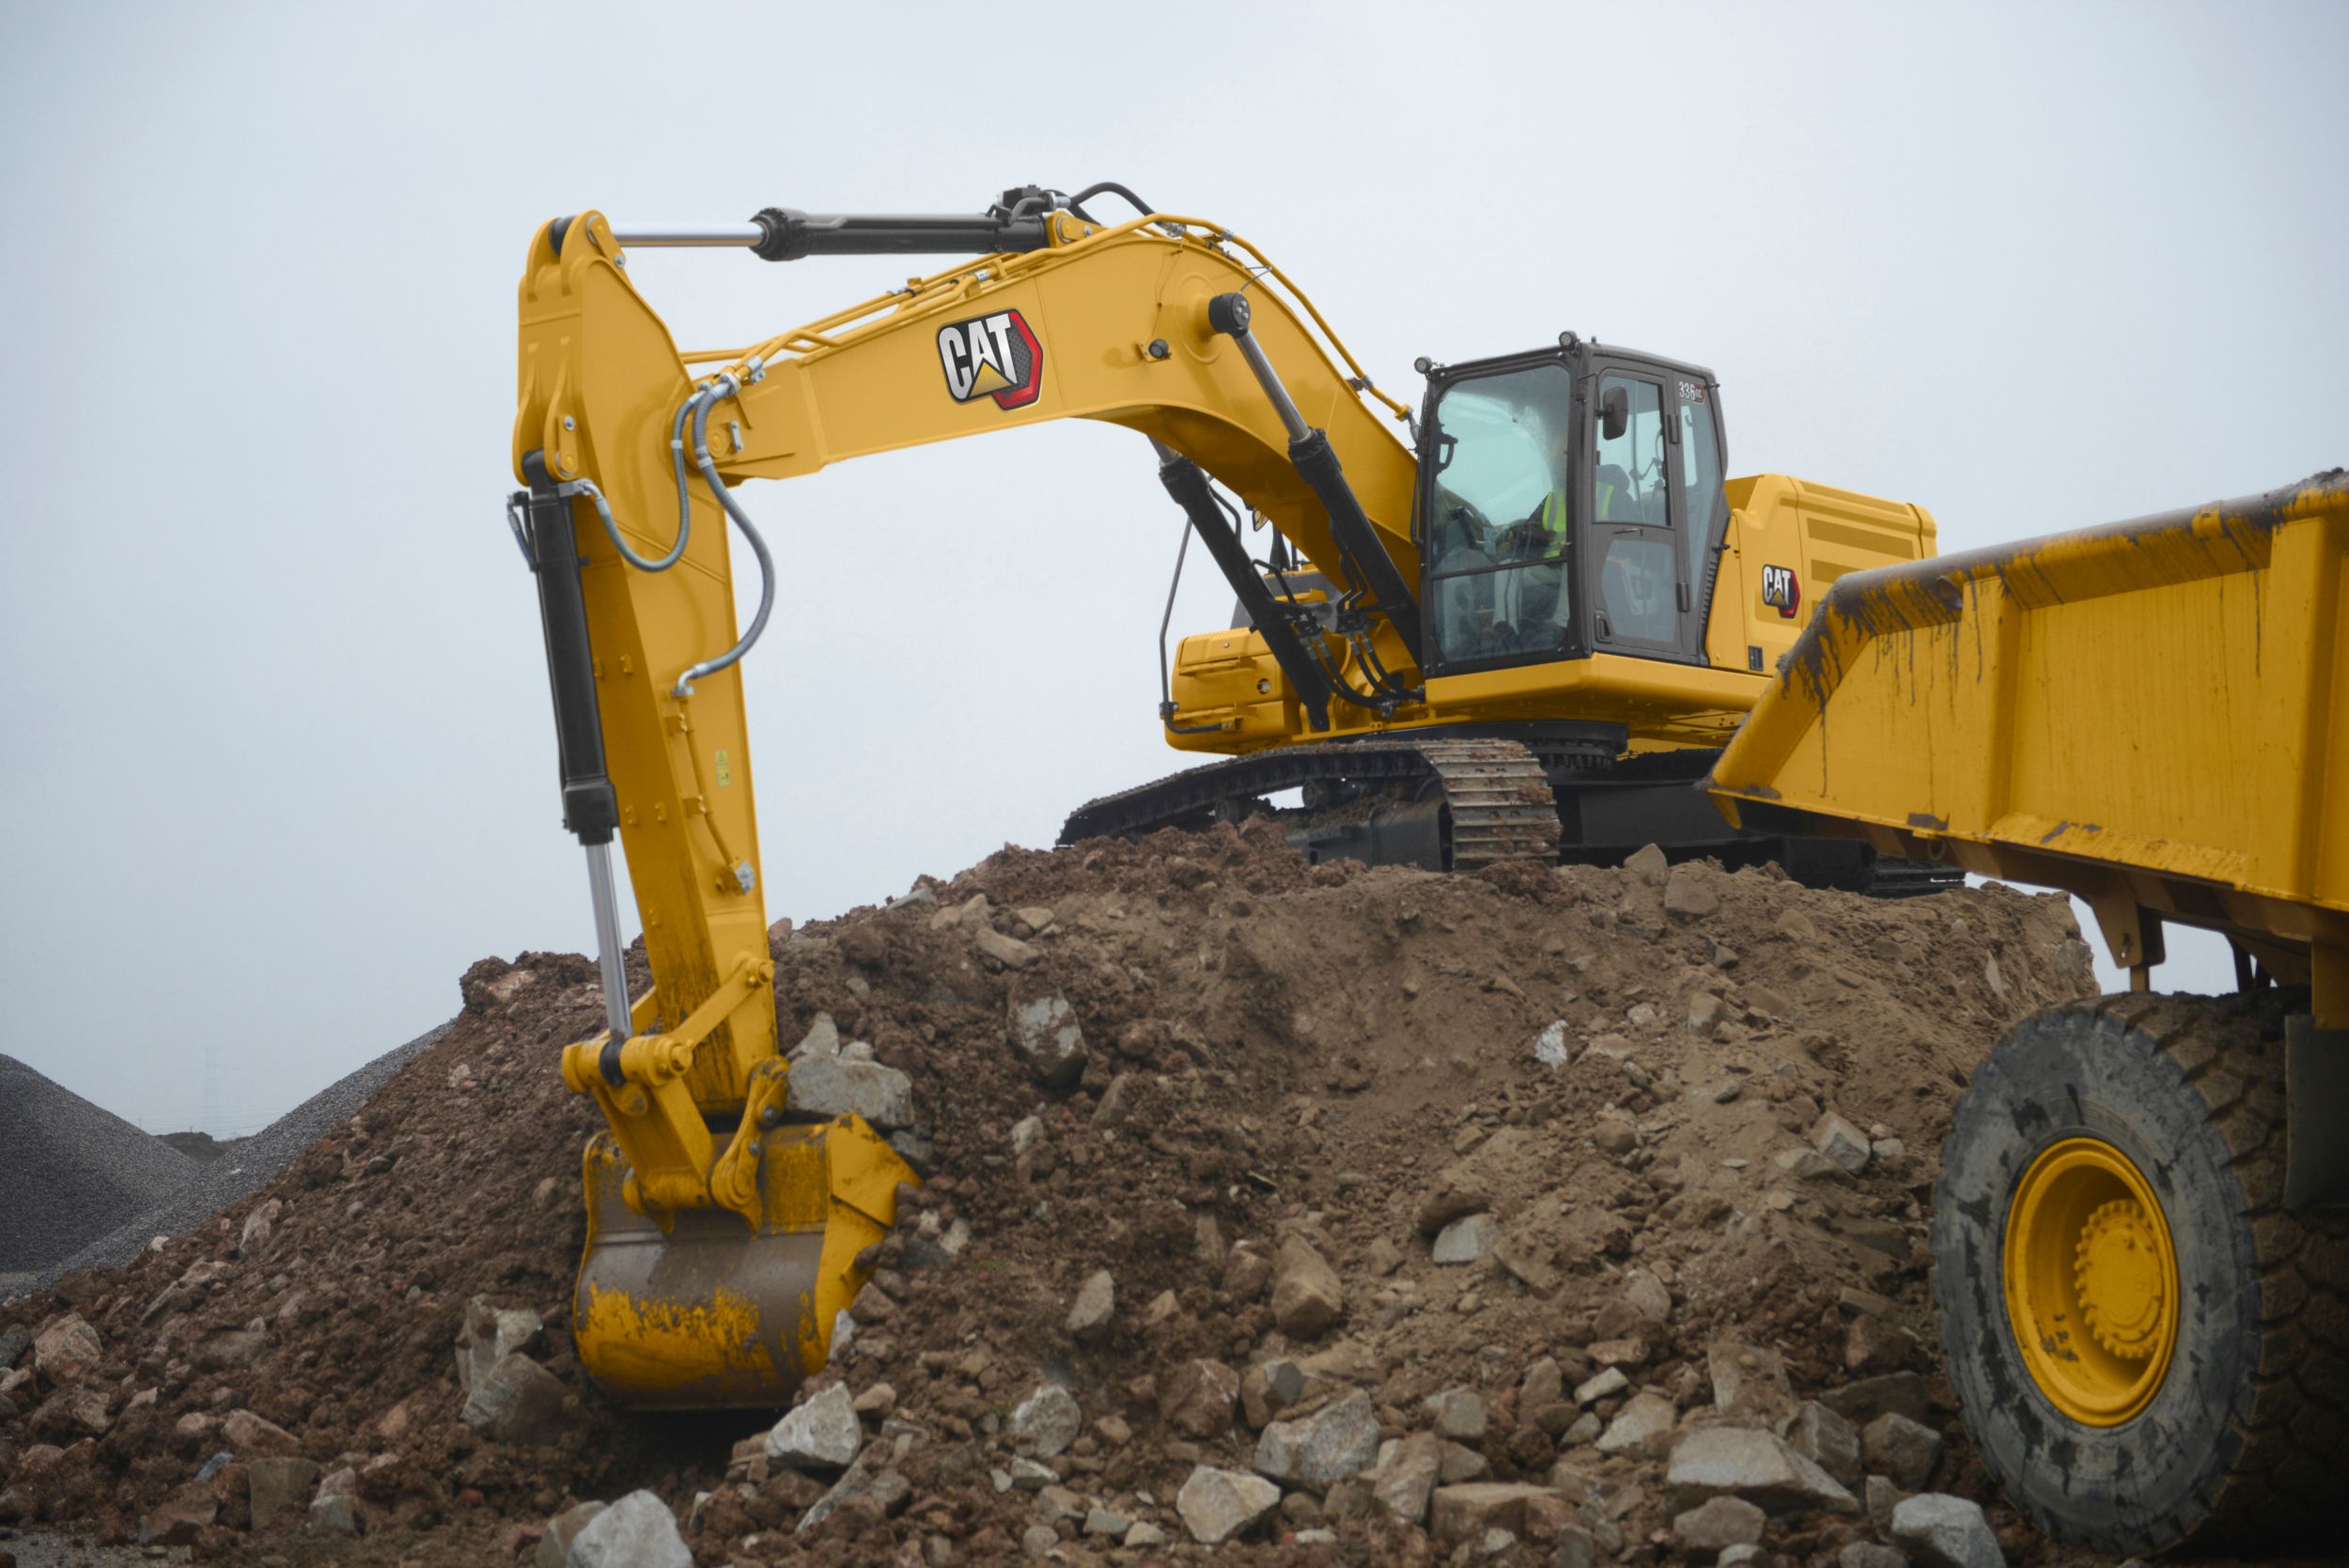 Cat 336 GC Hydraulic Excavator - BUILT TO PERFORM